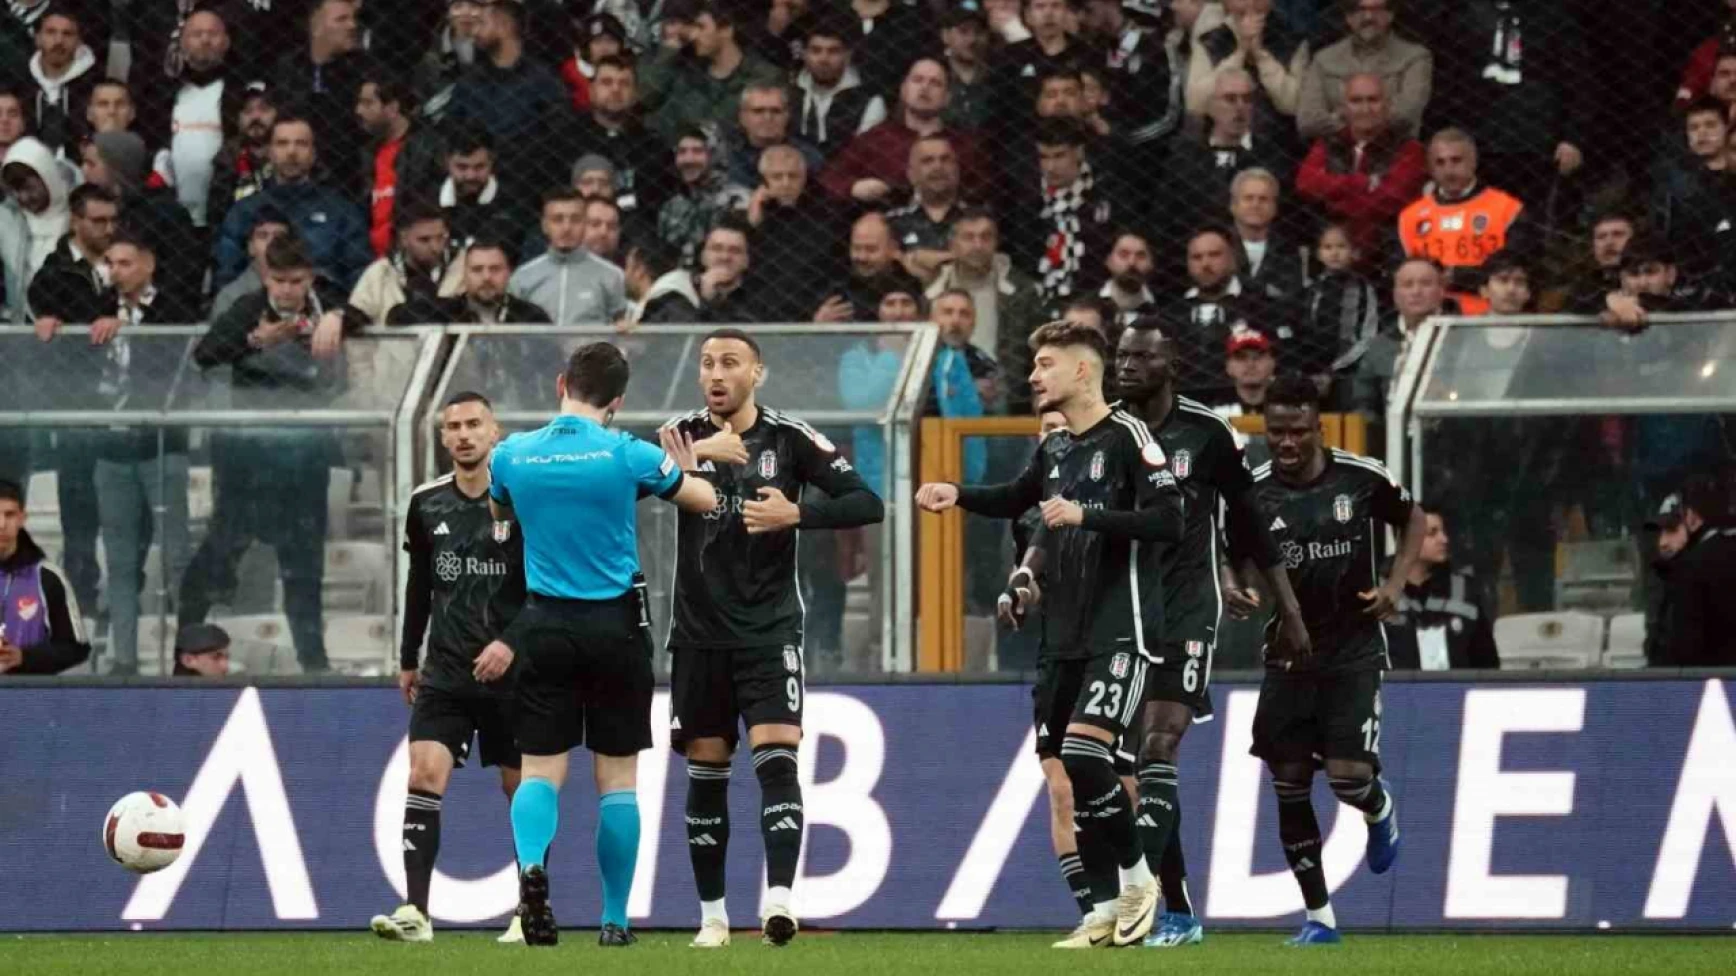 Beşiktaş, 6 maç sonra kaybetti